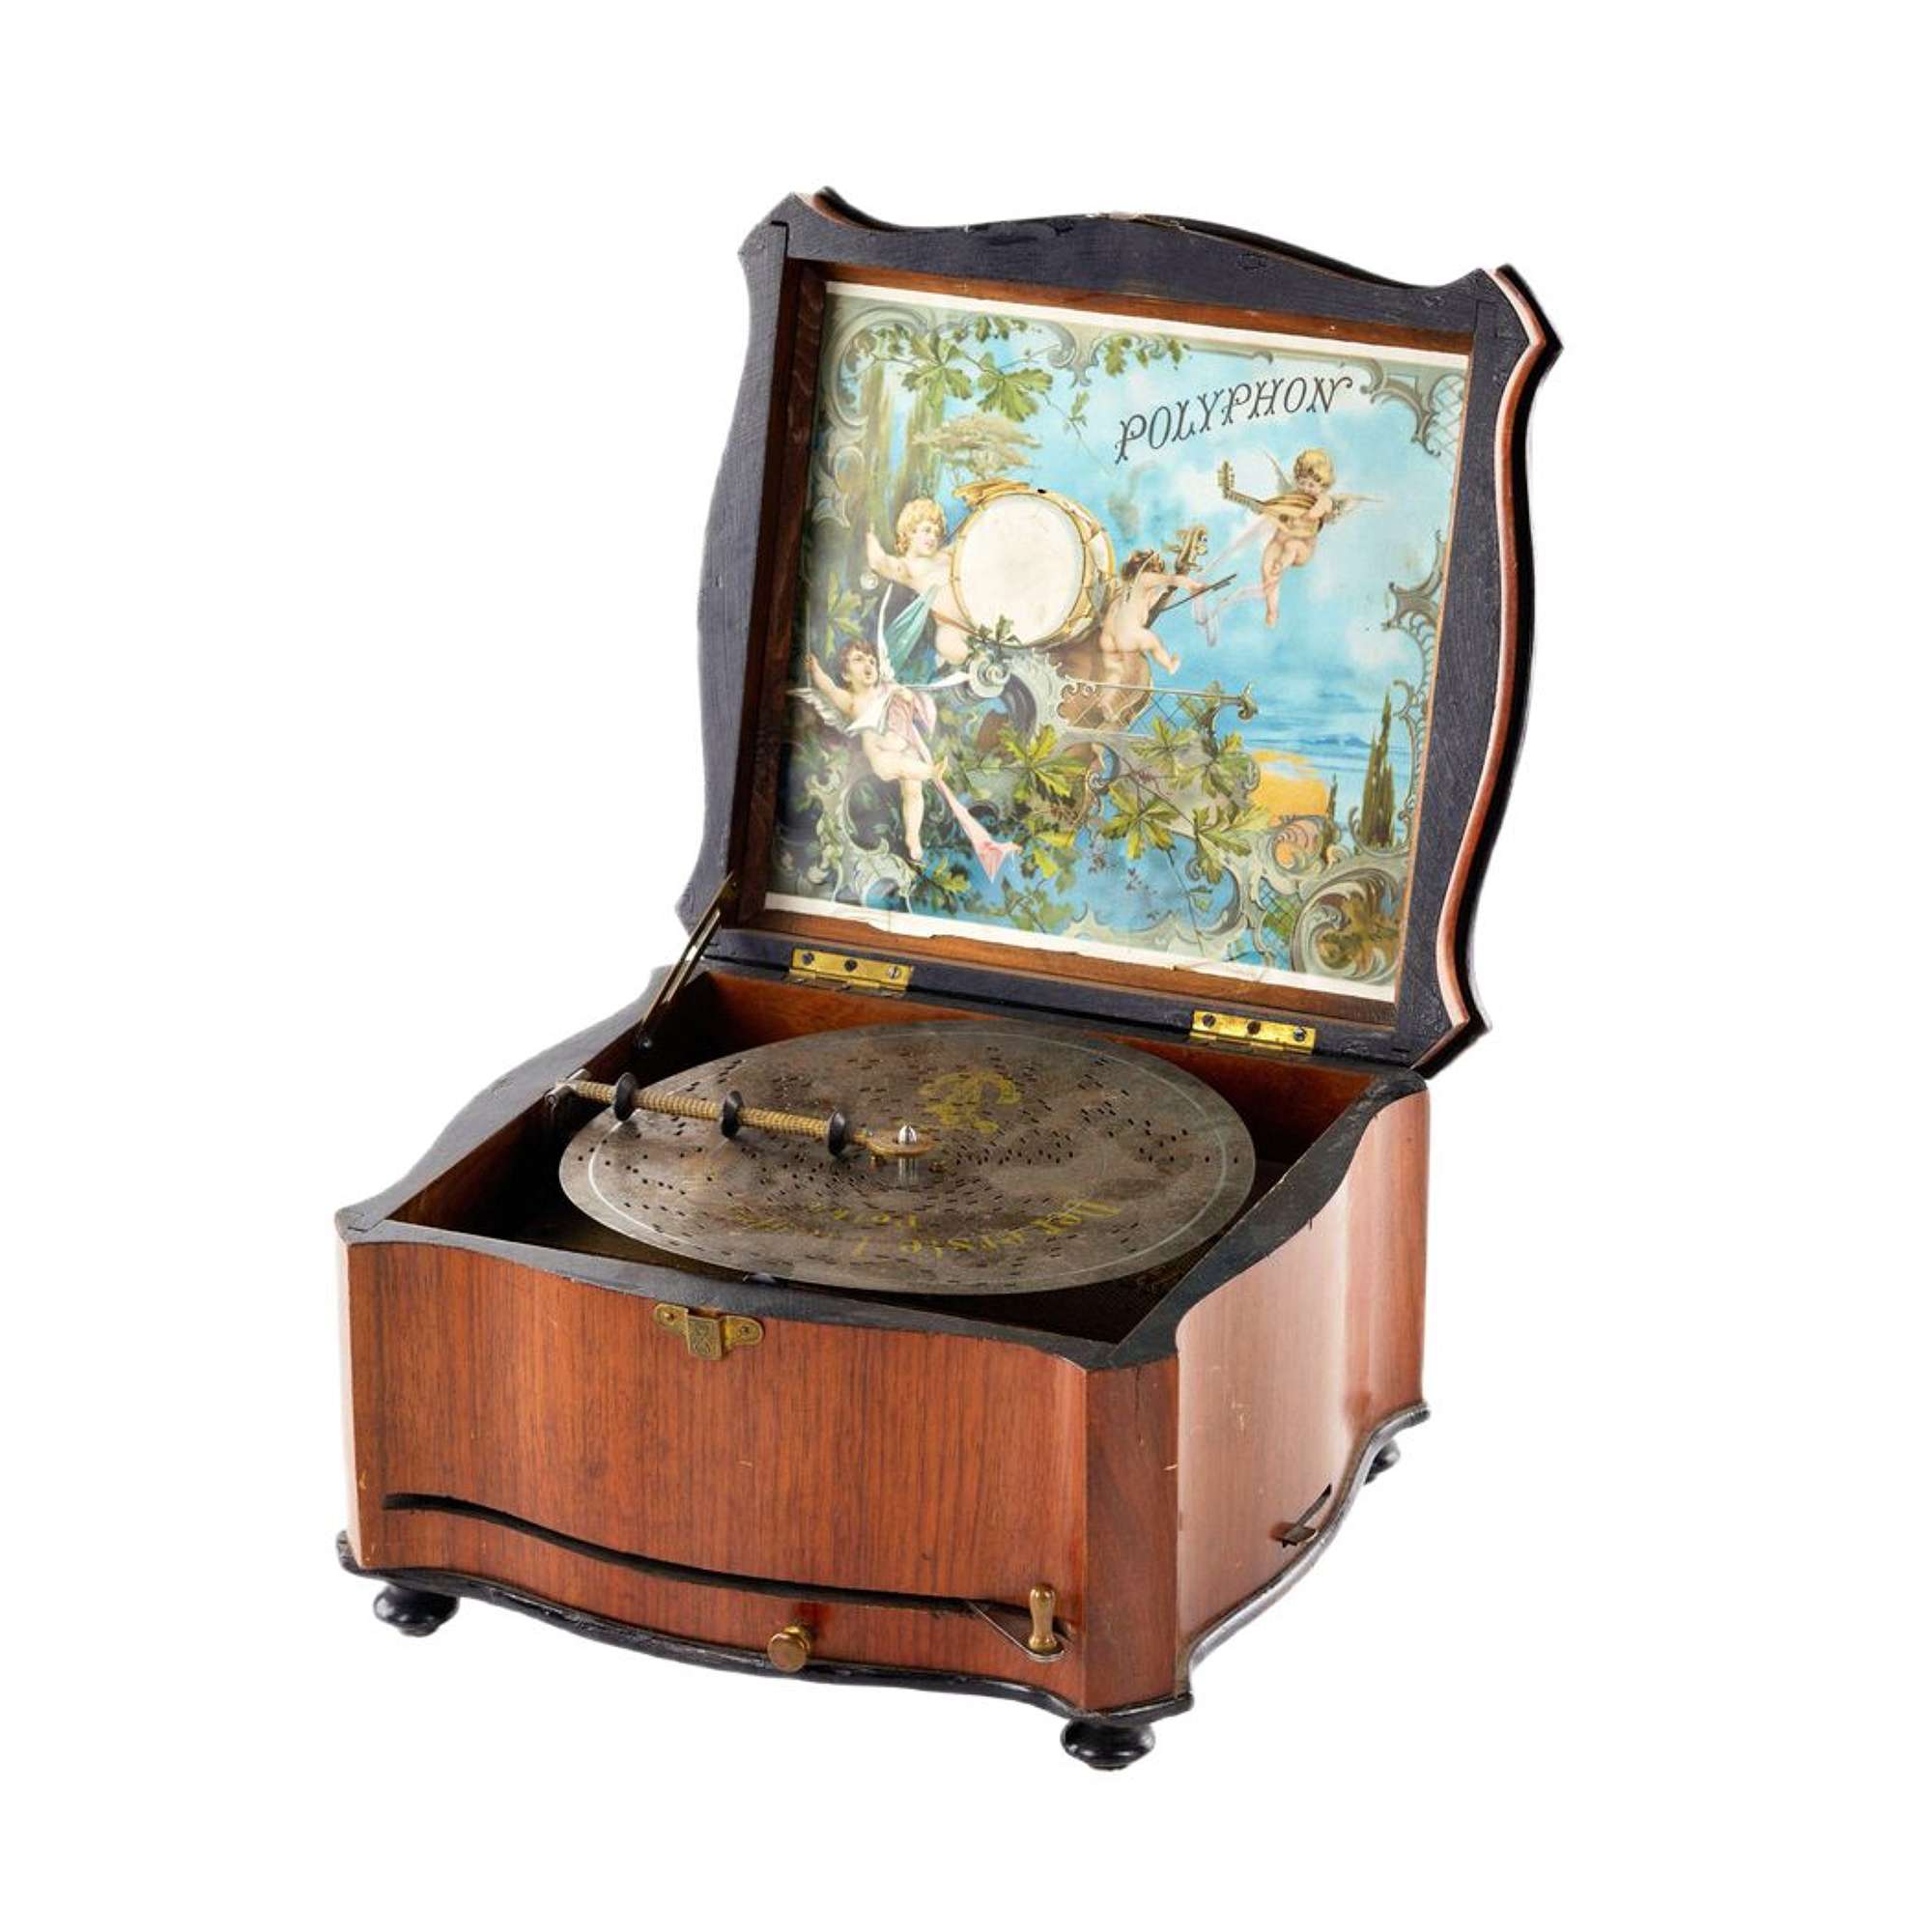 Vintage Music Box Polyphon